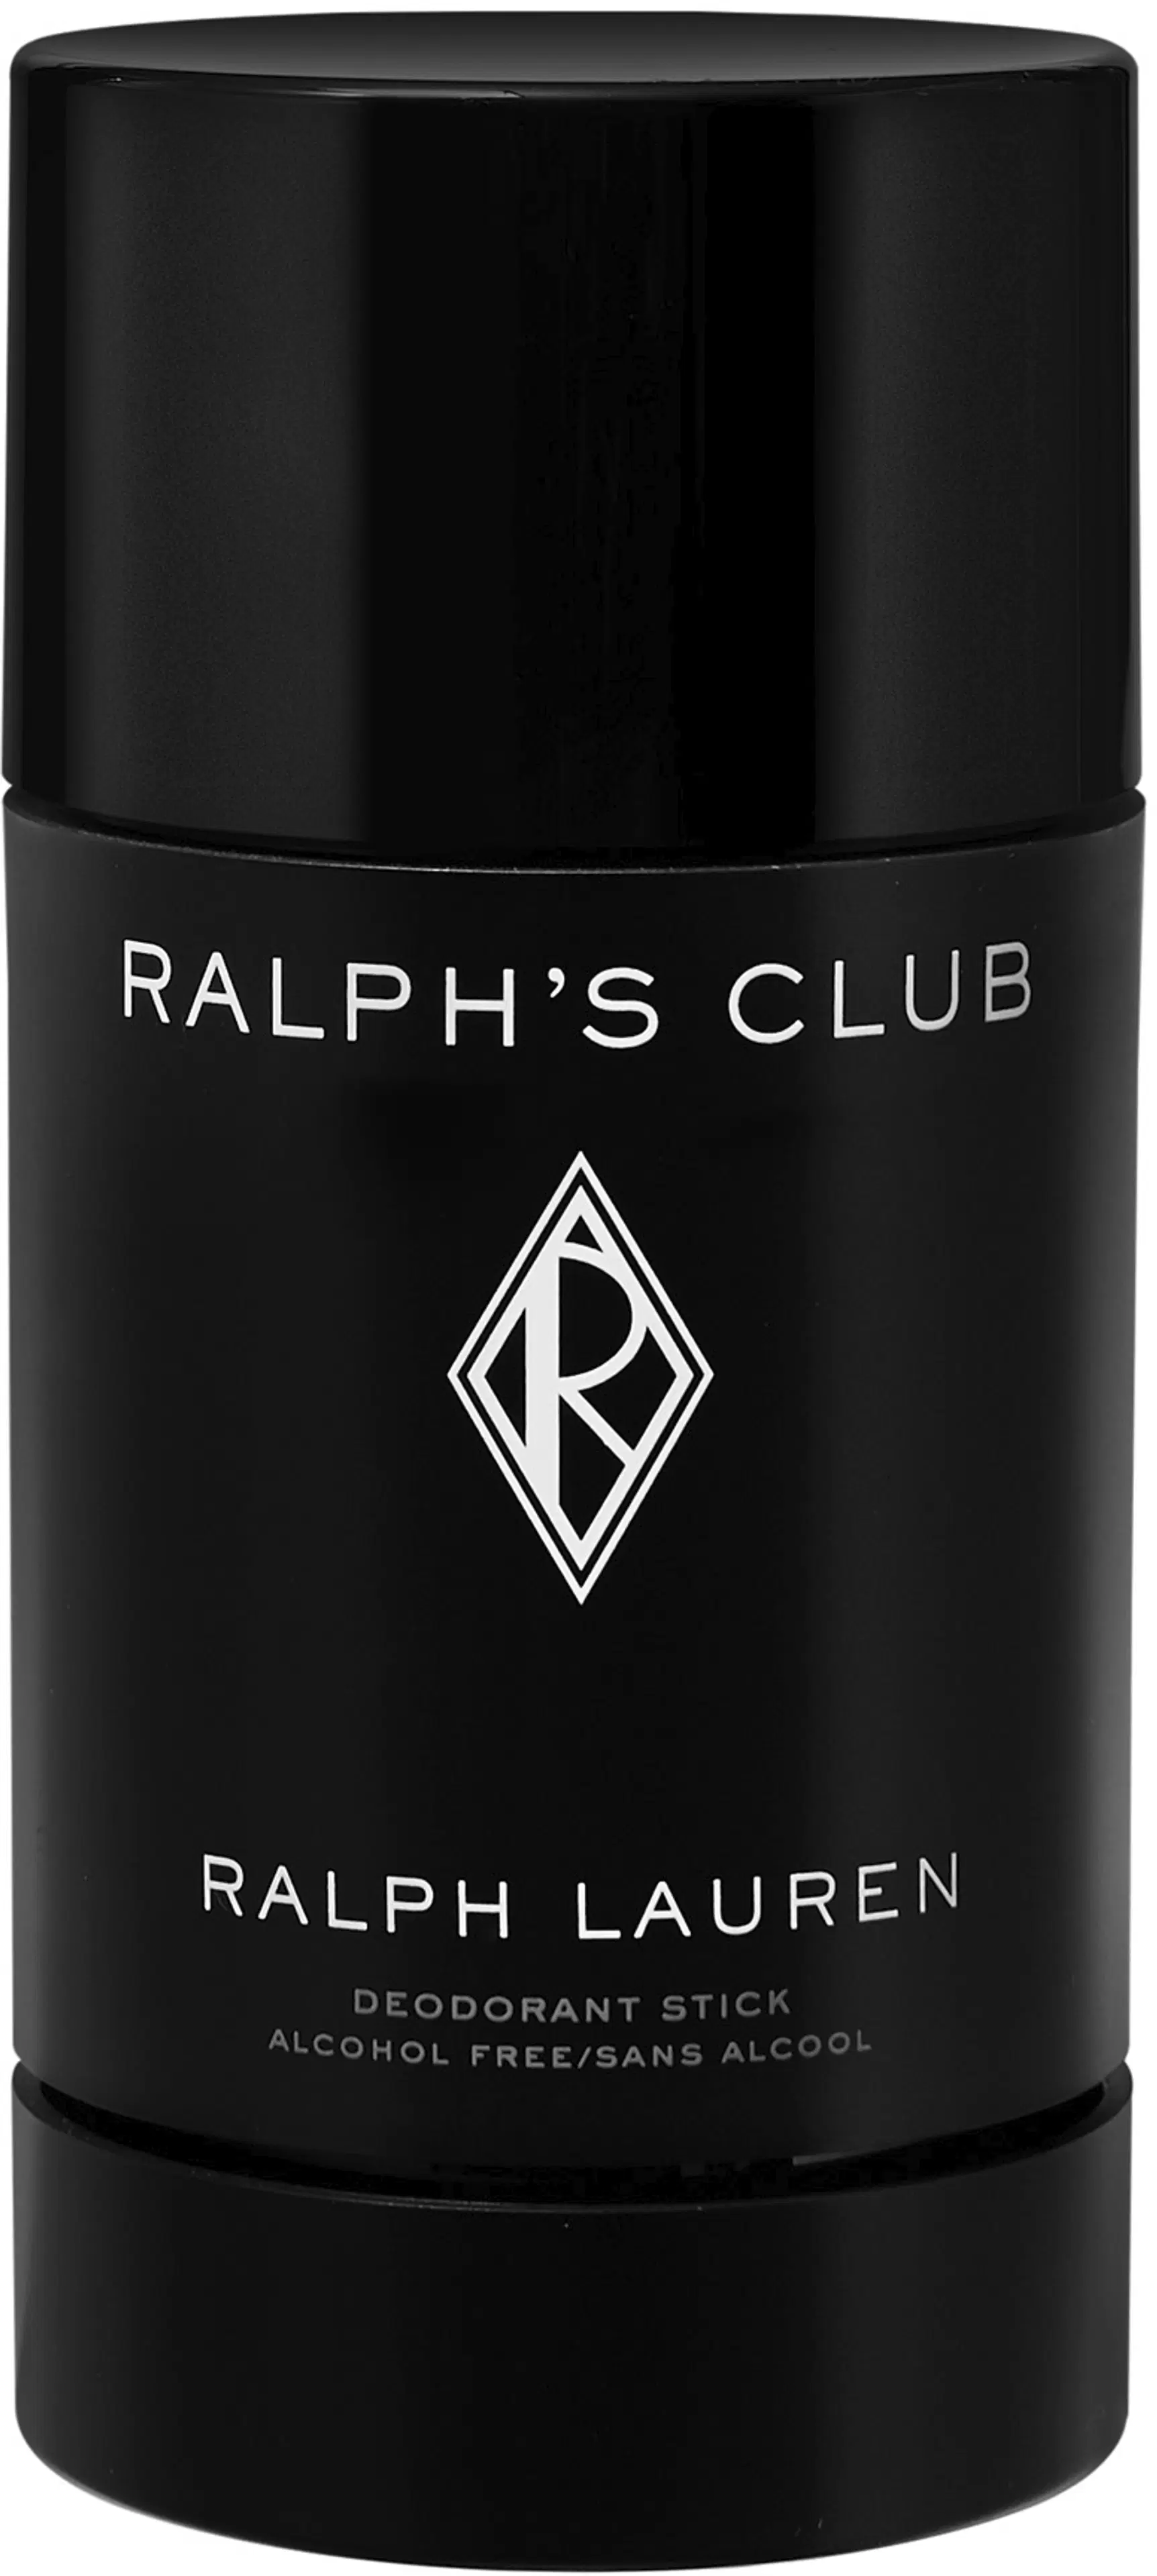 Ralph Lauren Ralph's Club Deodorant Stick 75g